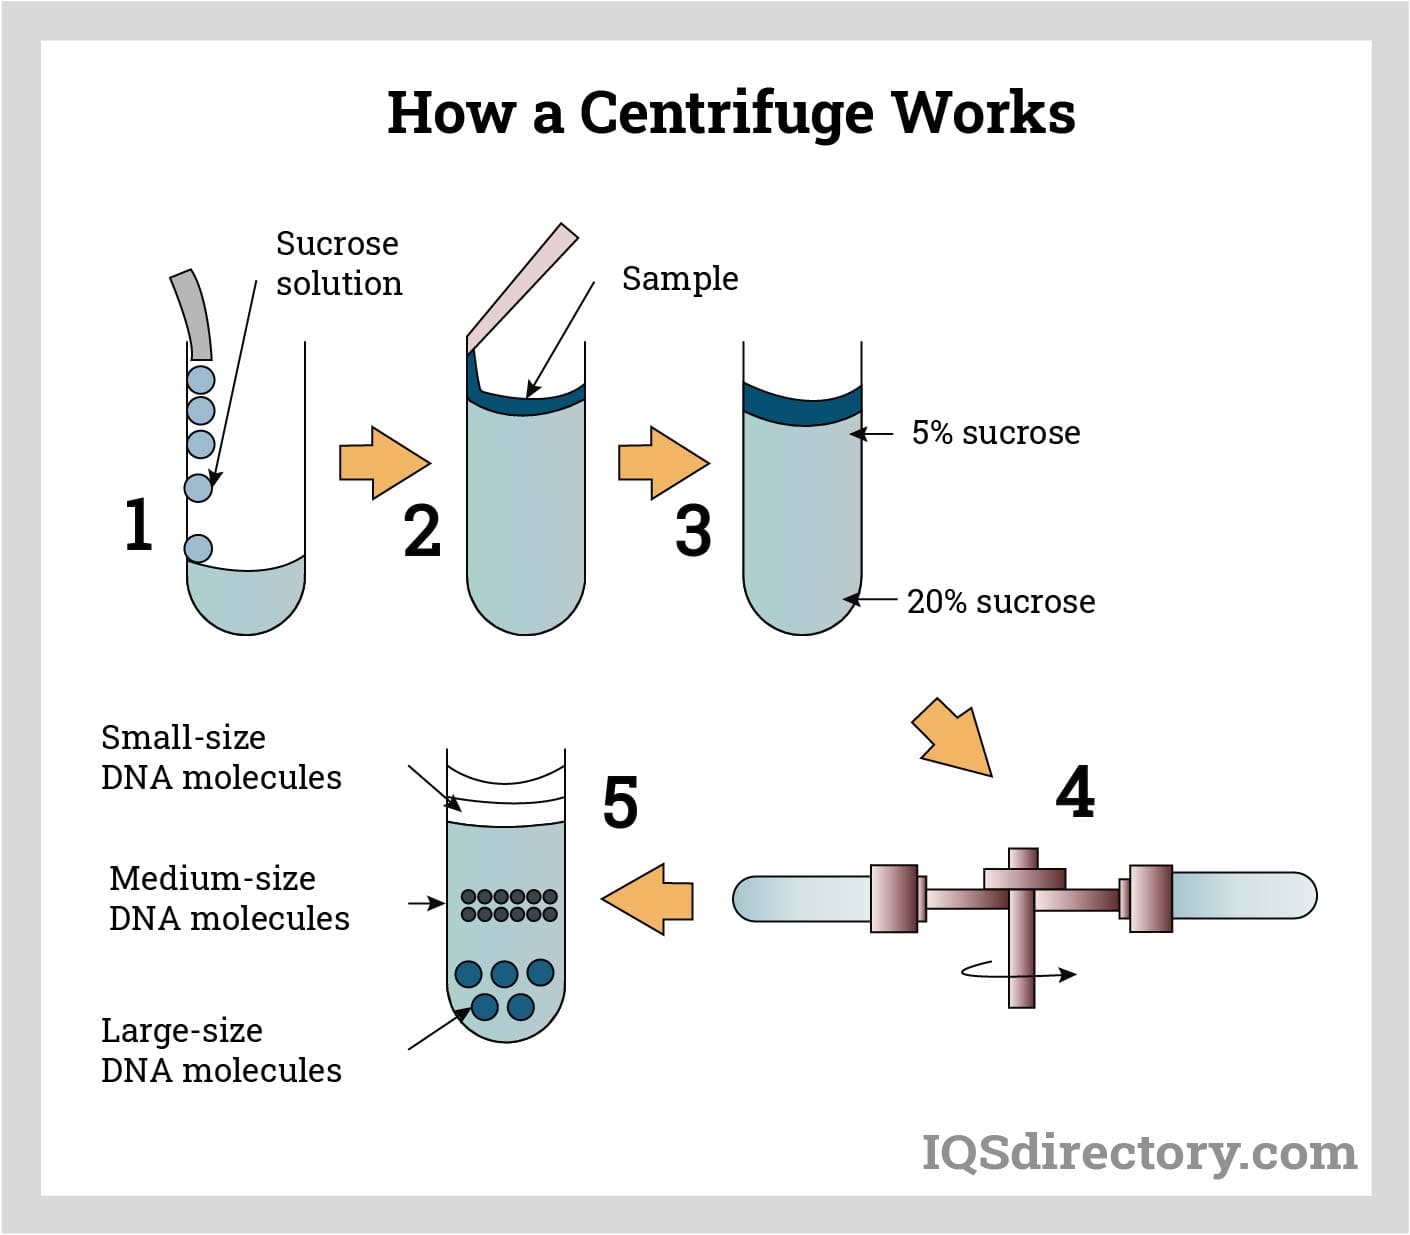 How a Centrifuge Works